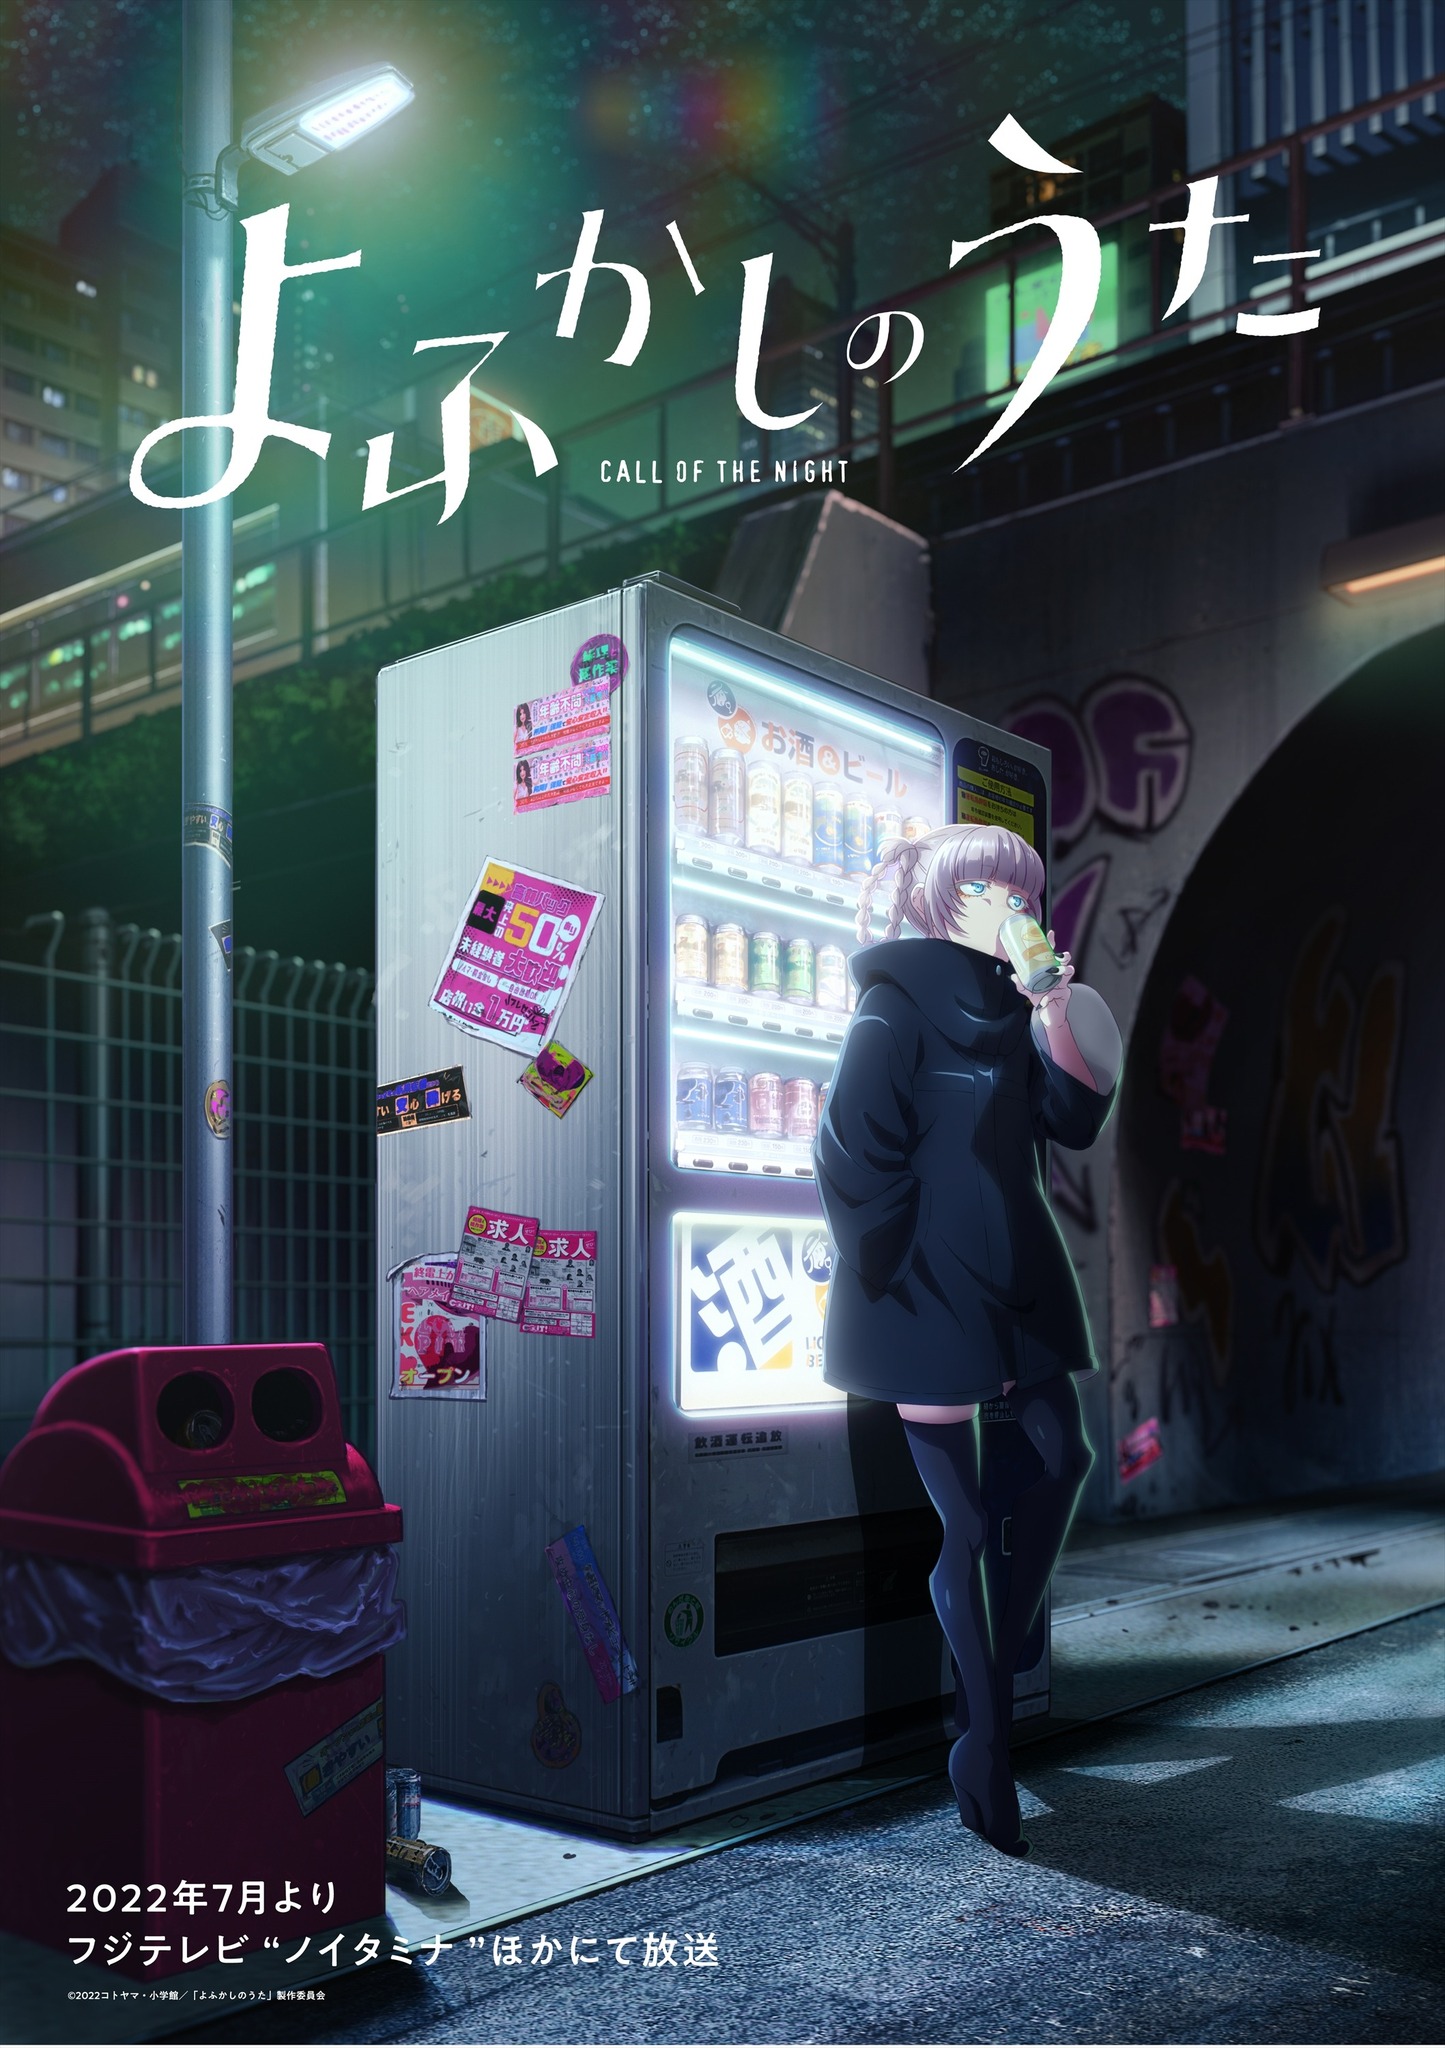 Download Ko Yamori Call Of The Night Anime Wallpaper | Wallpapers.com